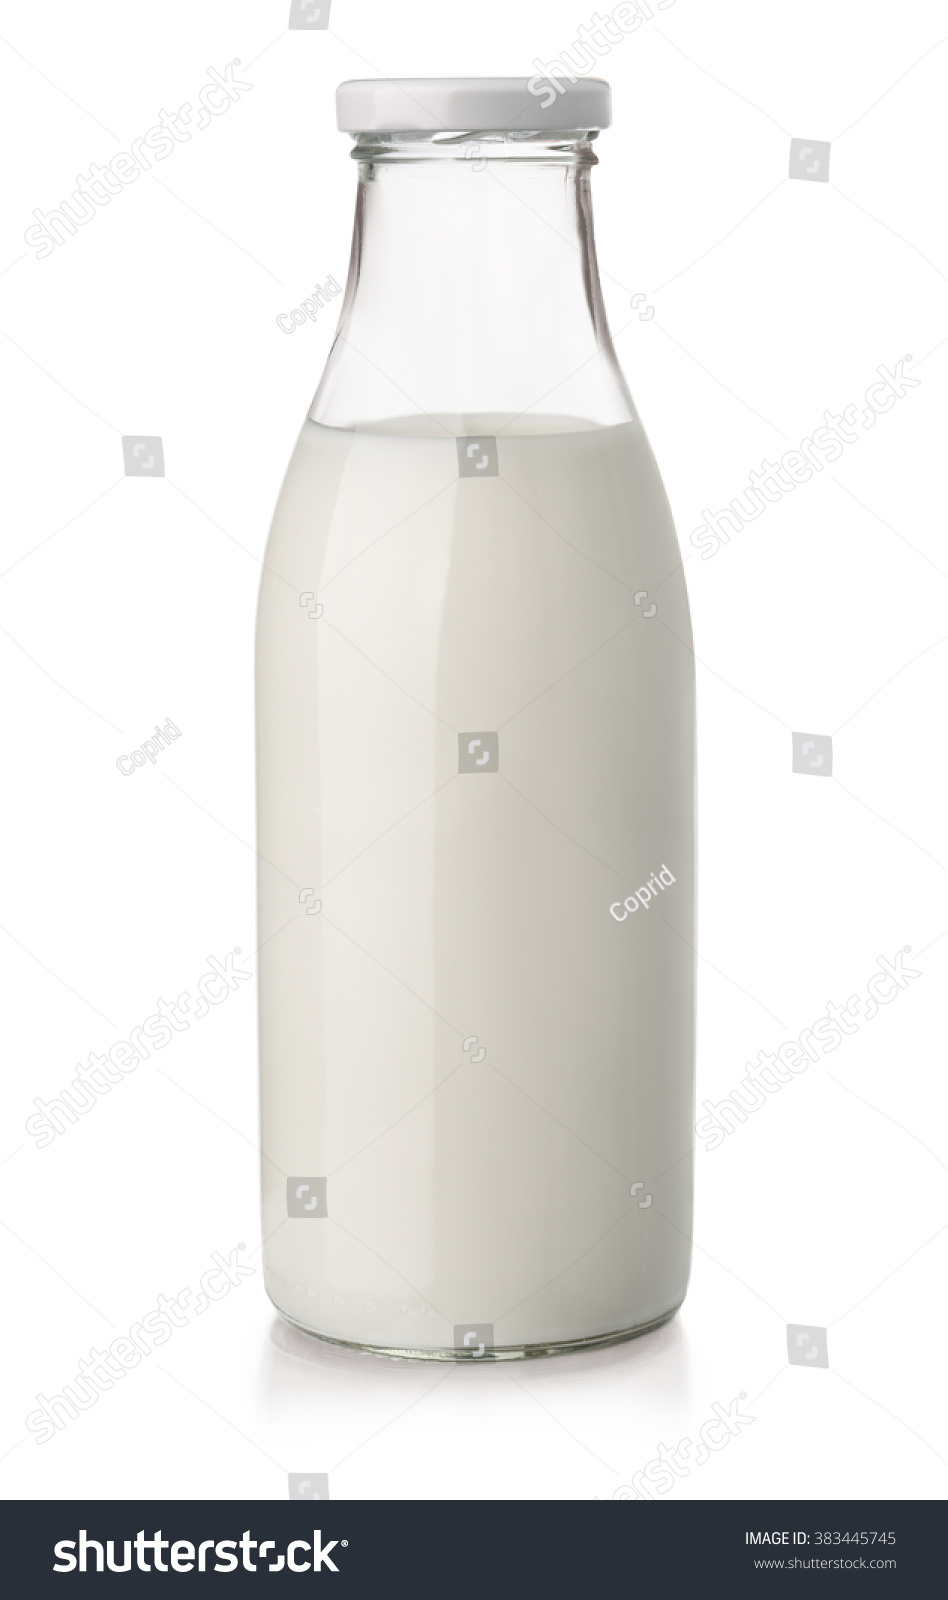 Milk bottle isolated on white #383445745